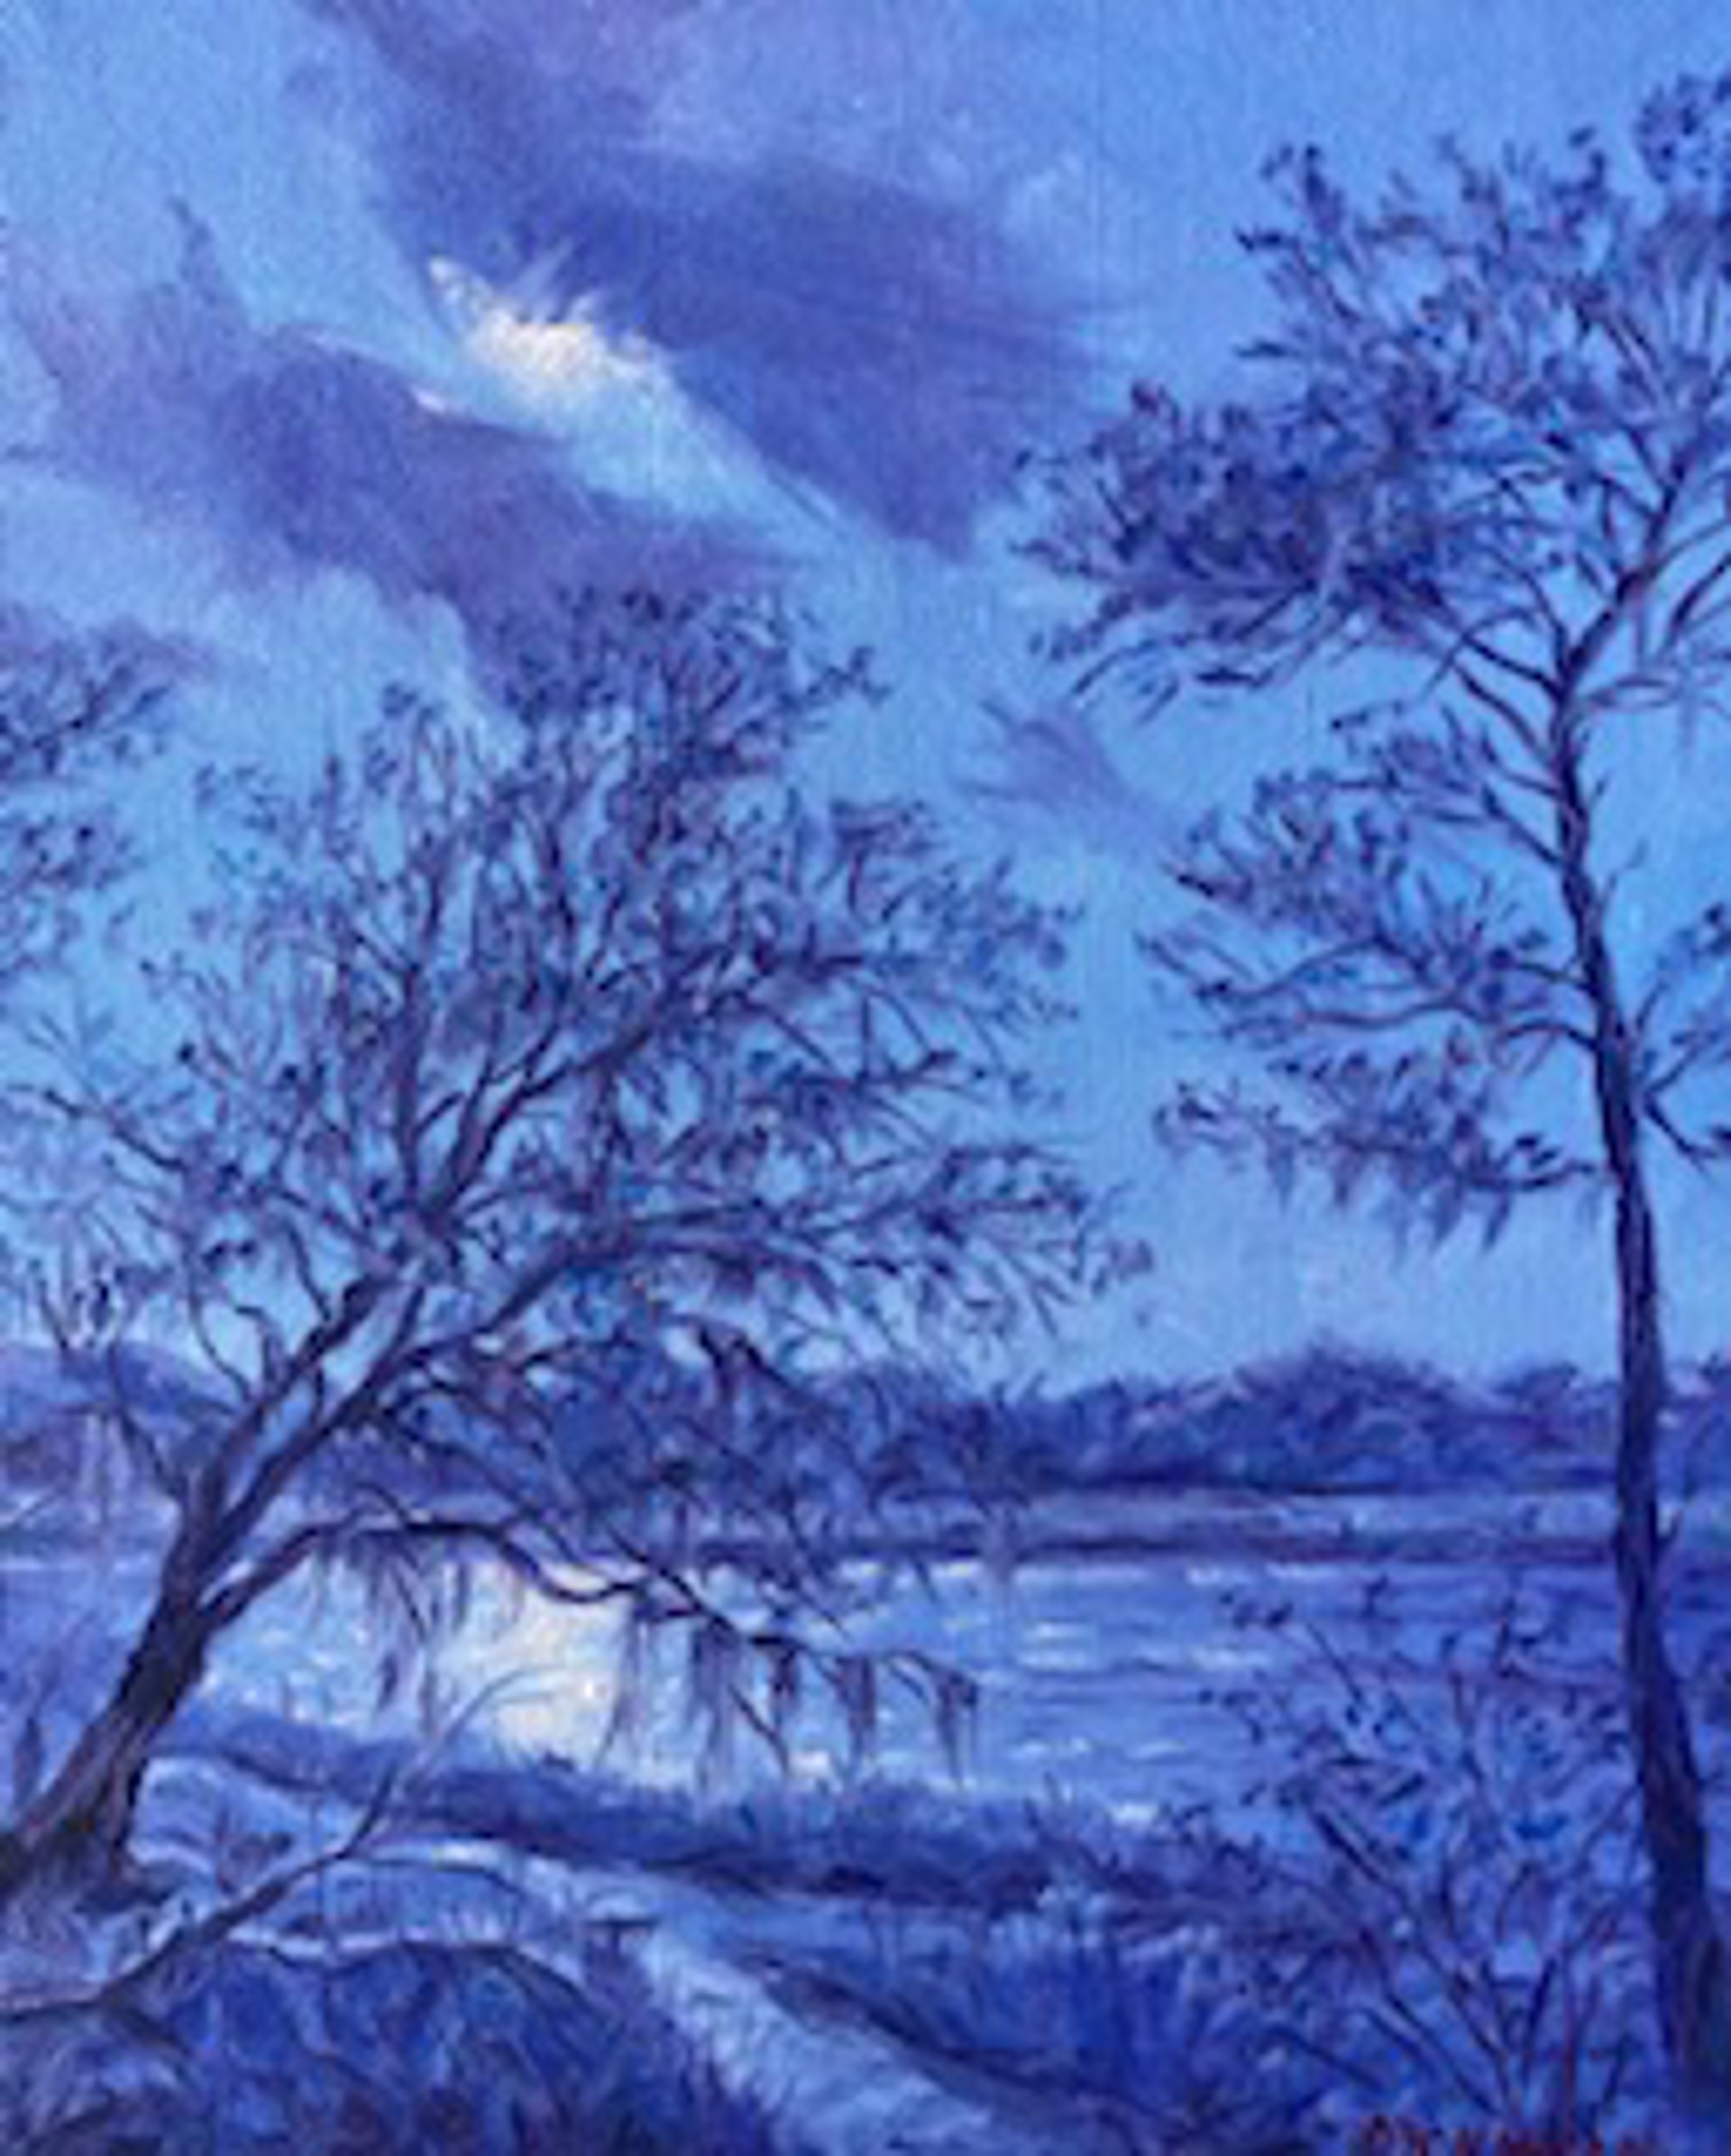 Moonlight on Prevatt Lake by Charles Dickinson